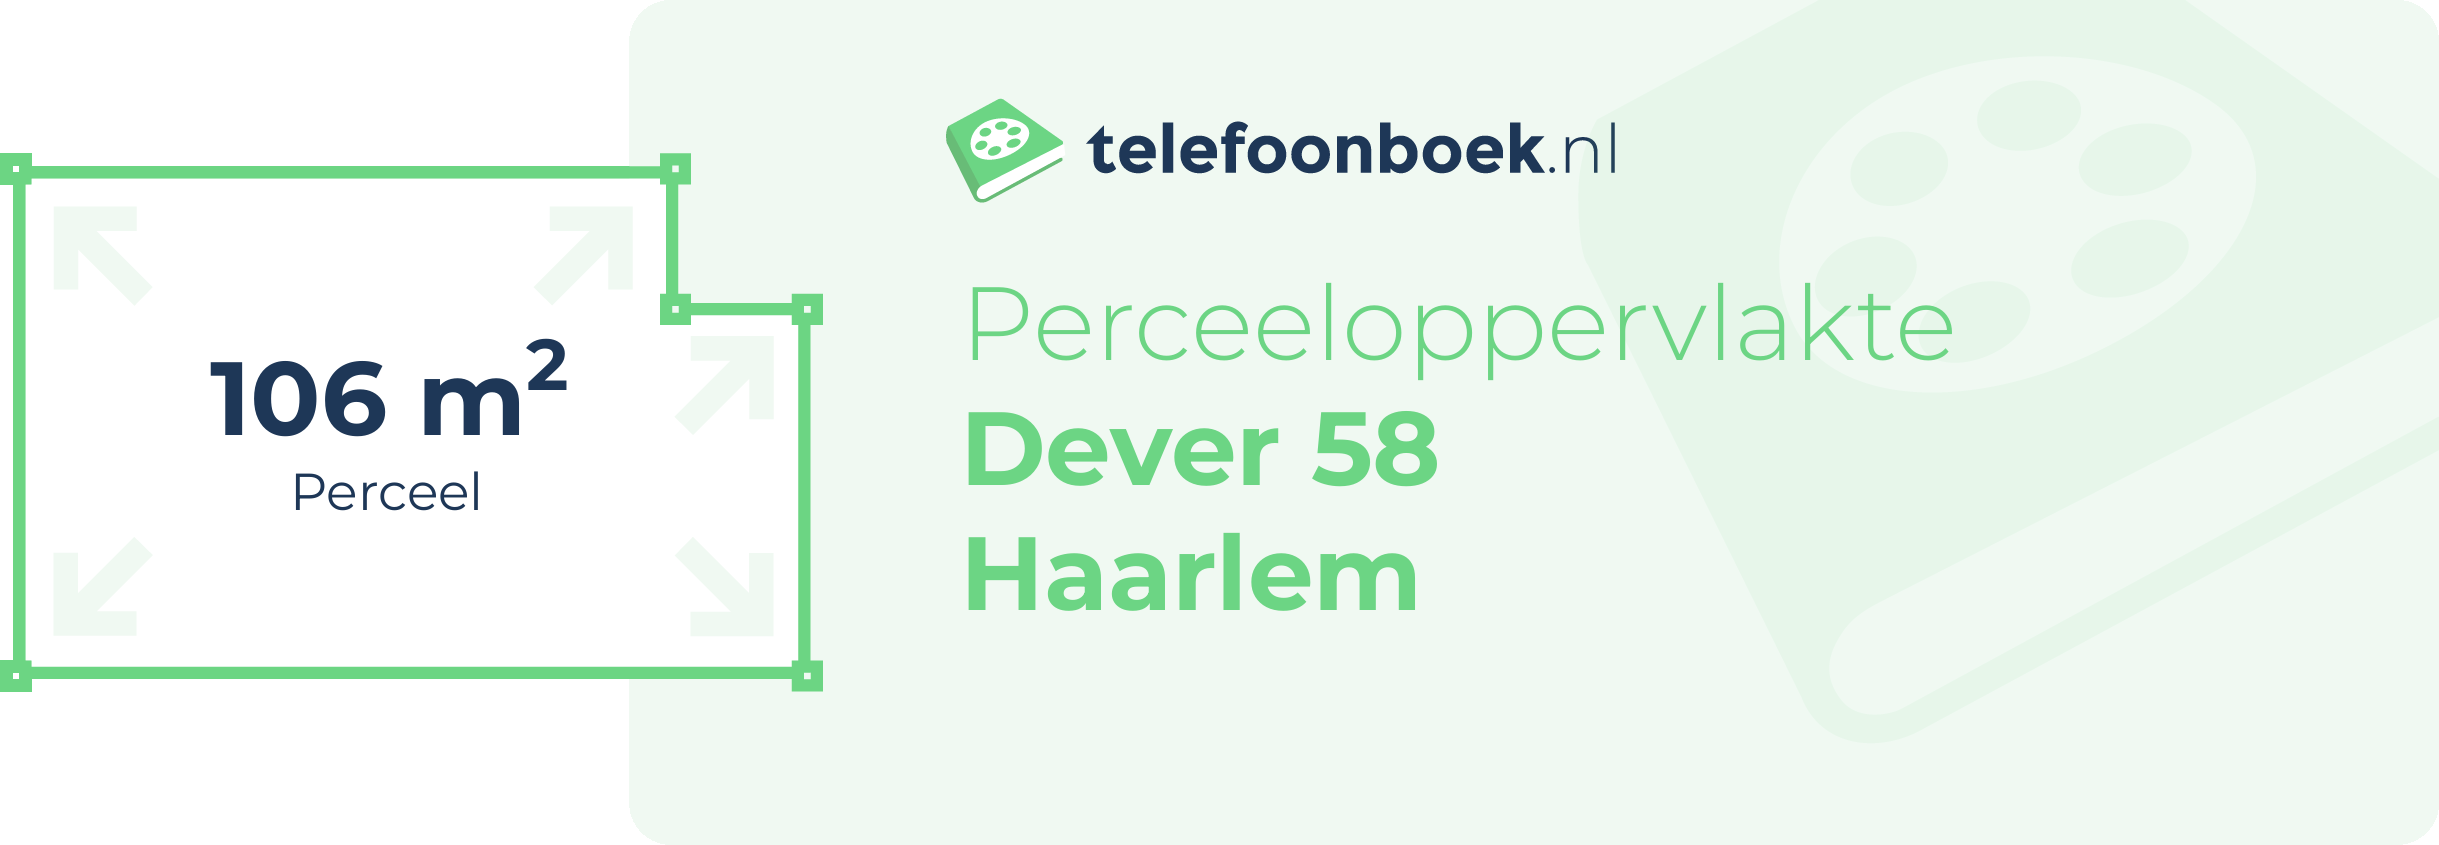 Perceeloppervlakte Dever 58 Haarlem